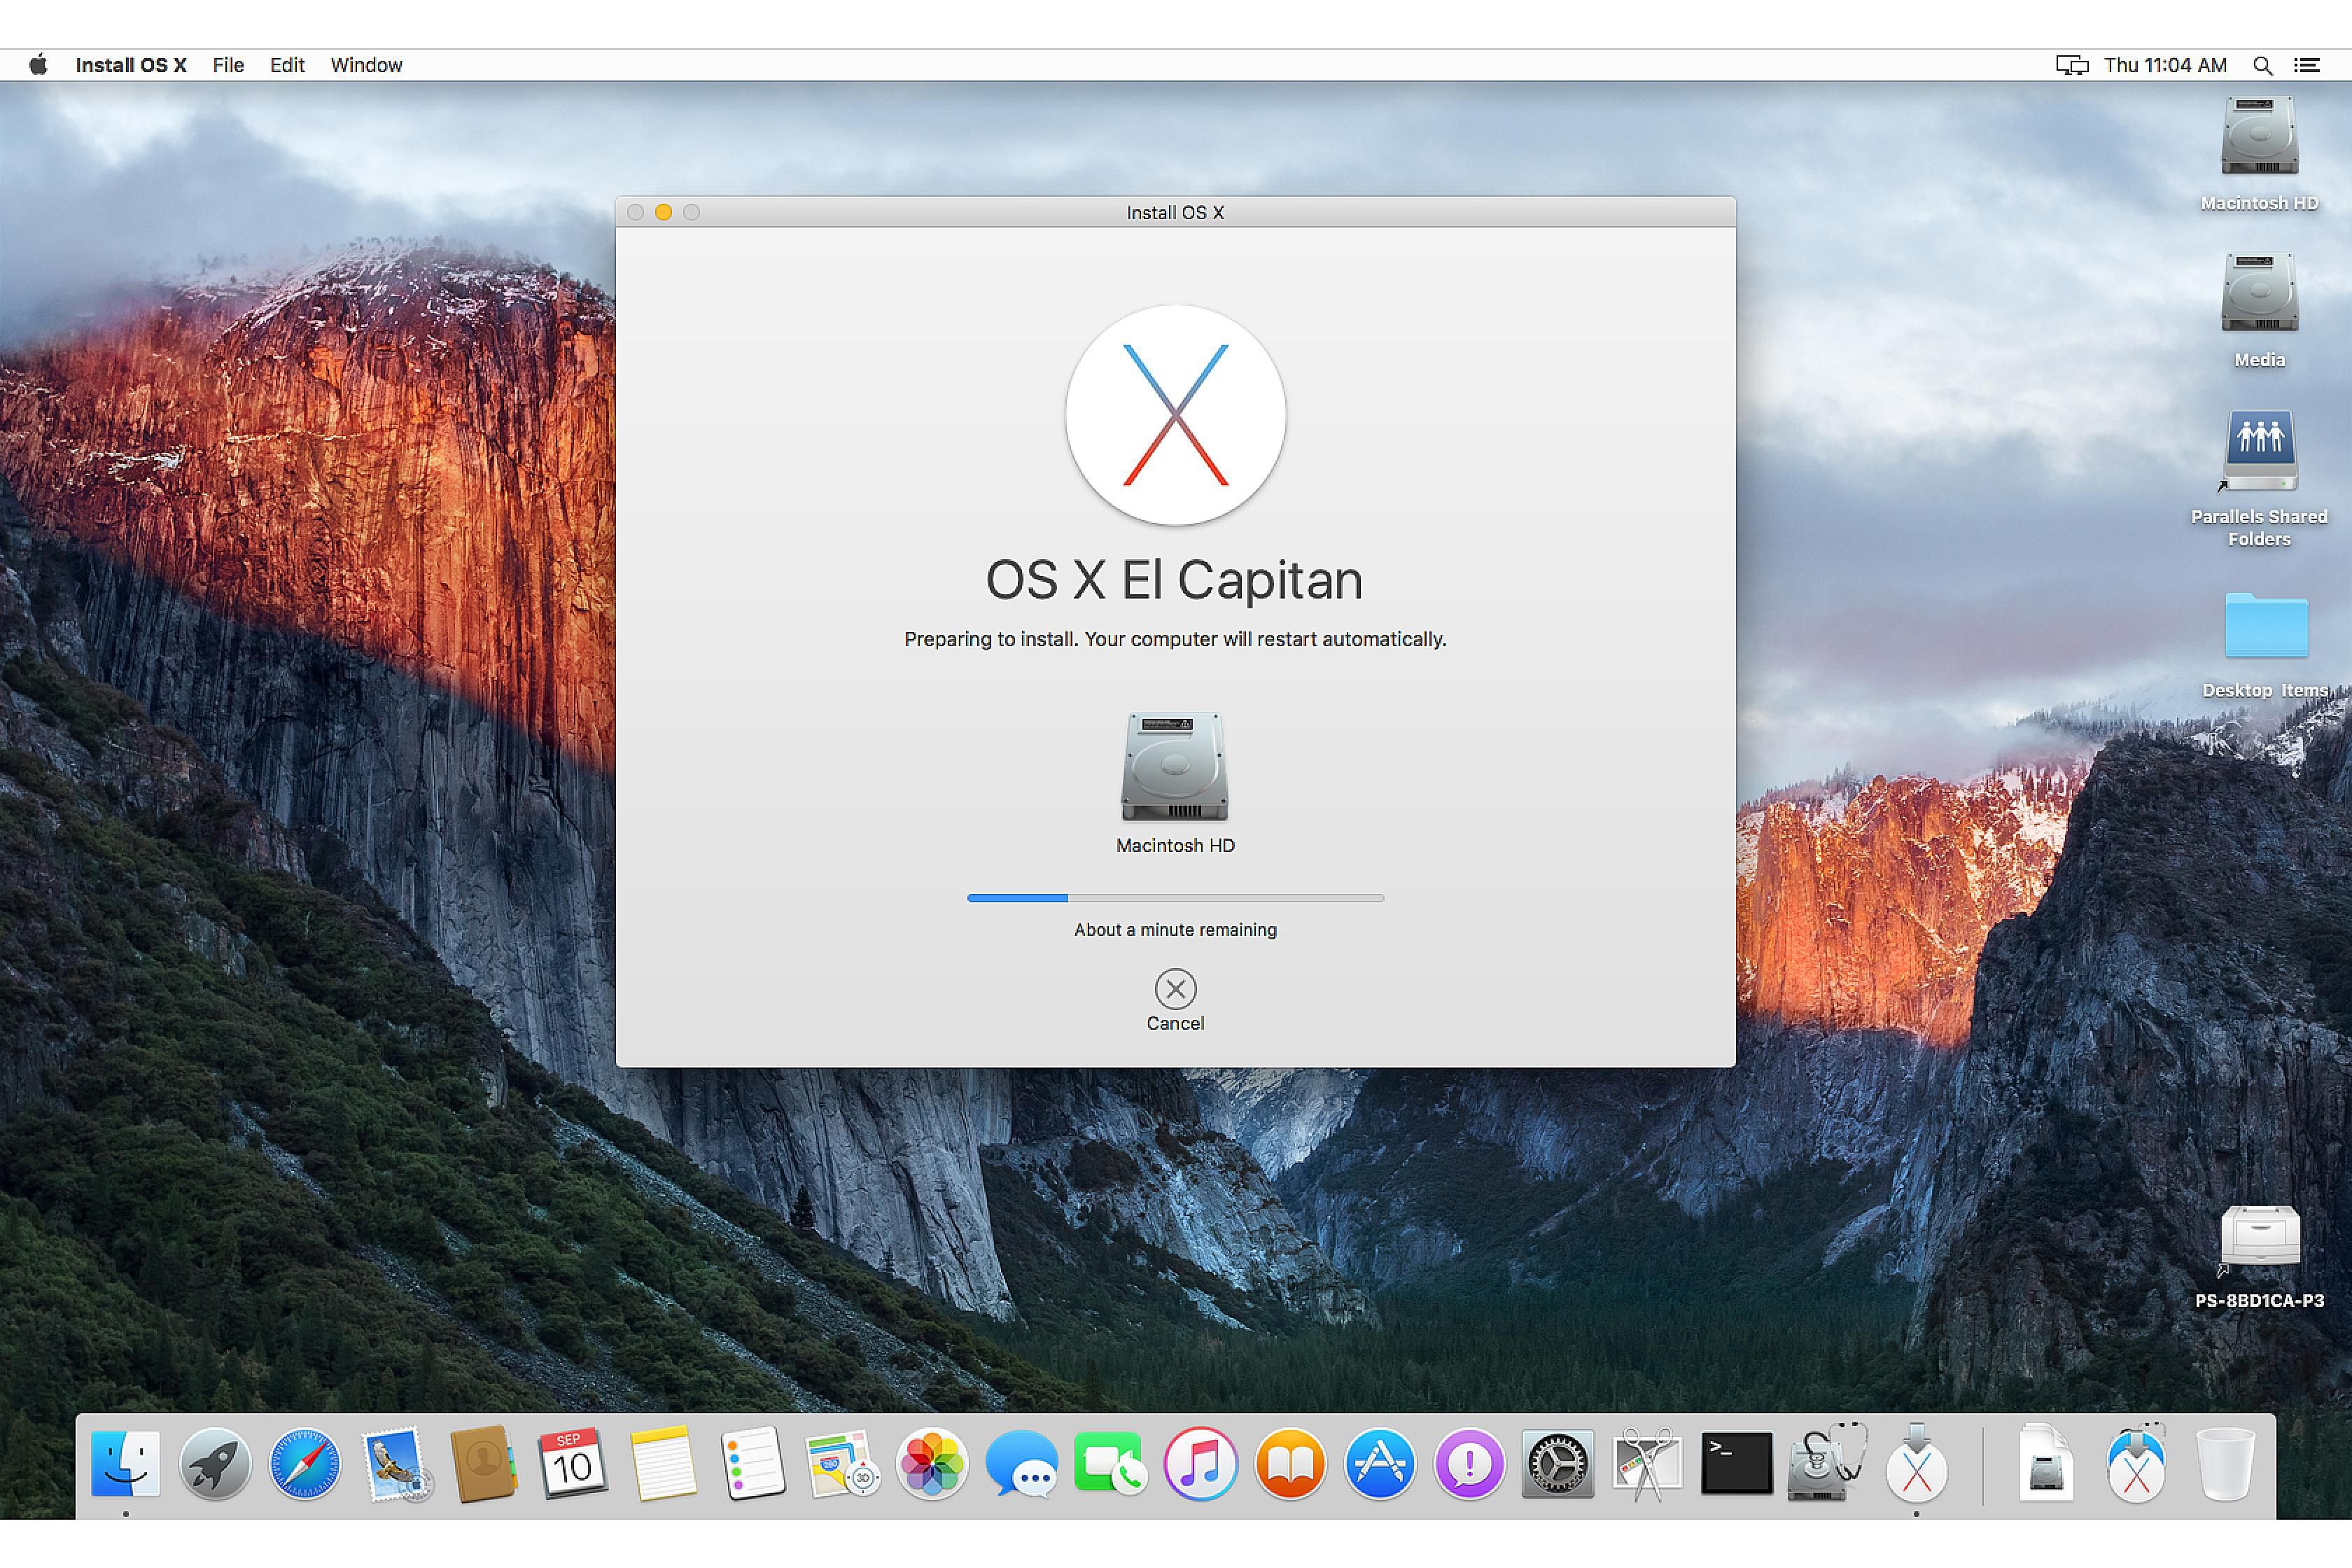 silverlight 5 update for mac os x el capitan version 10.11